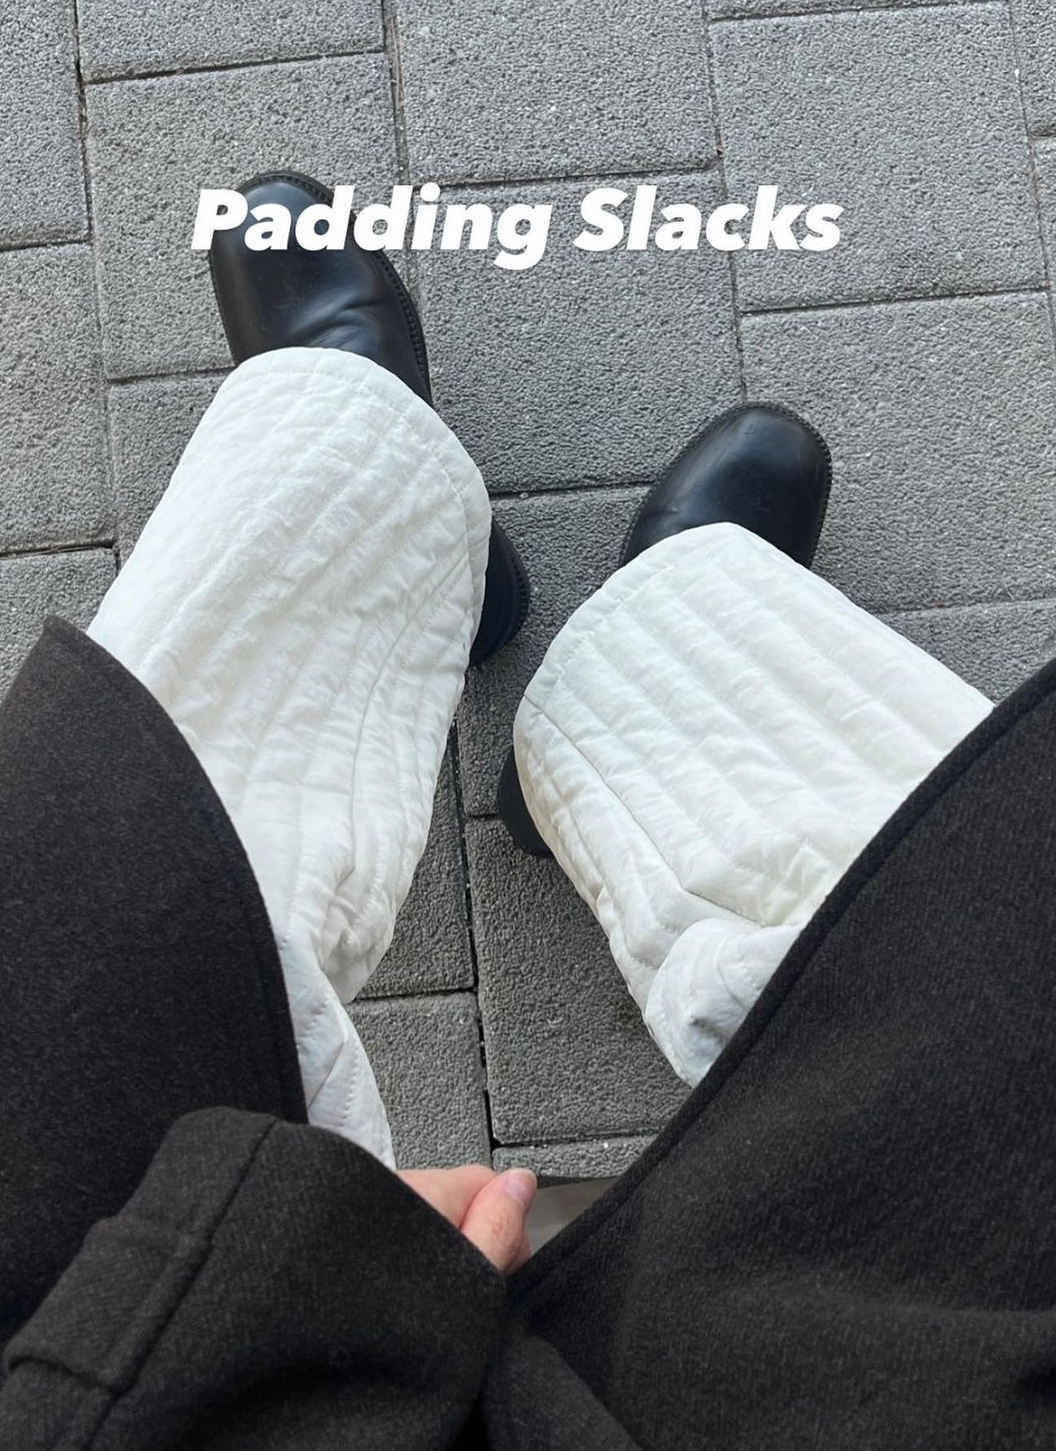 Padding banding slacks